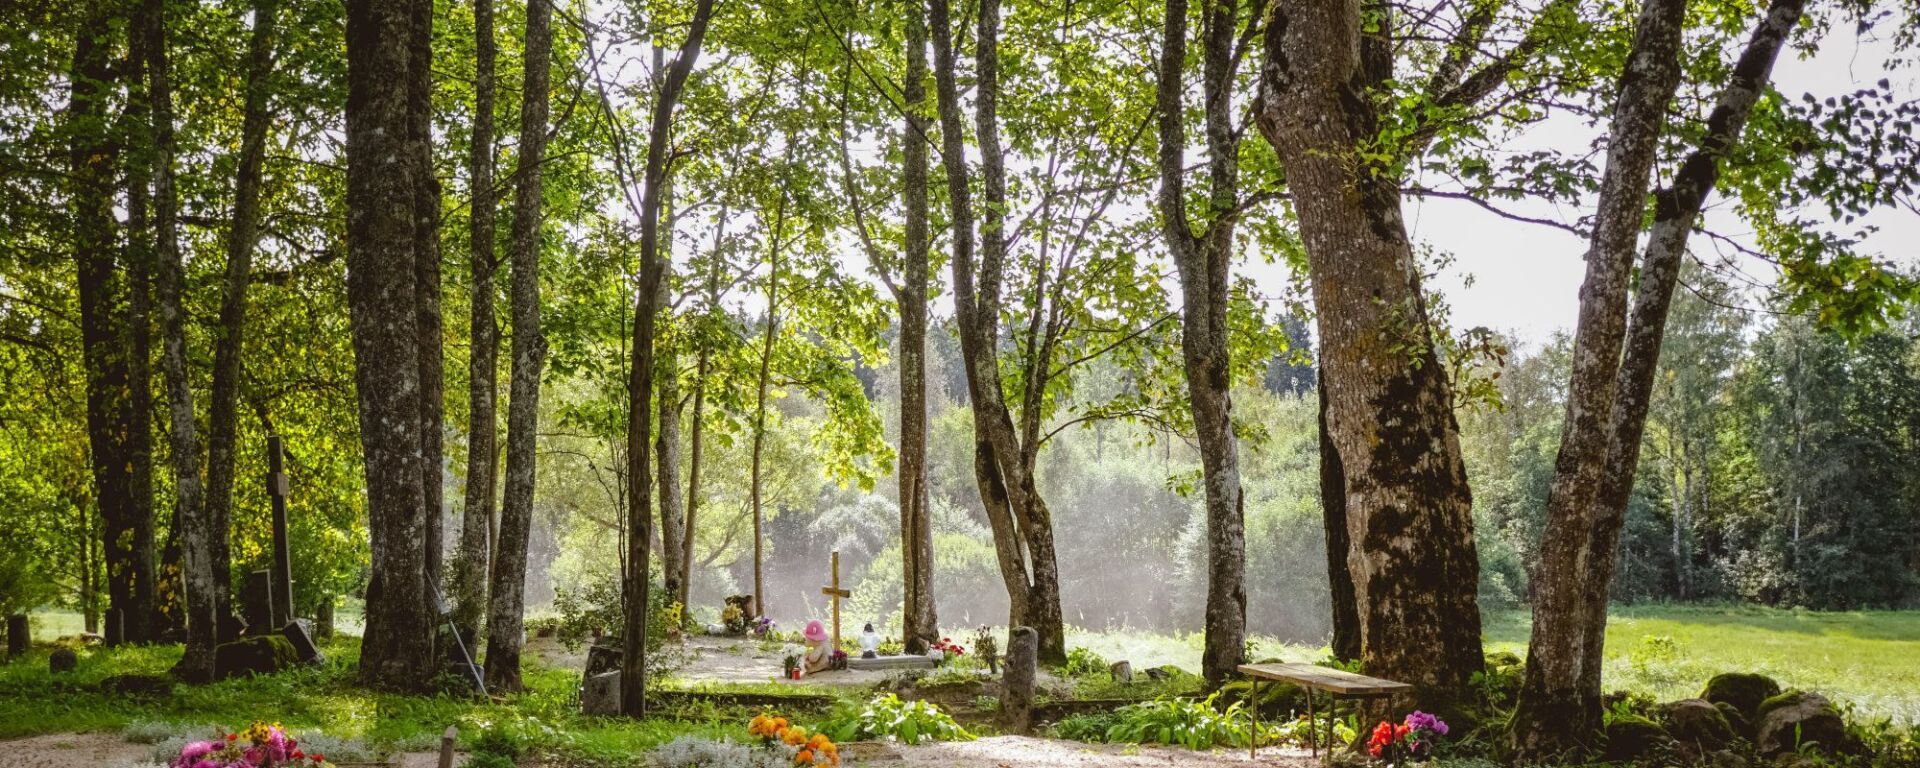 Tintrup Bestattungen - Friedhof im Wald